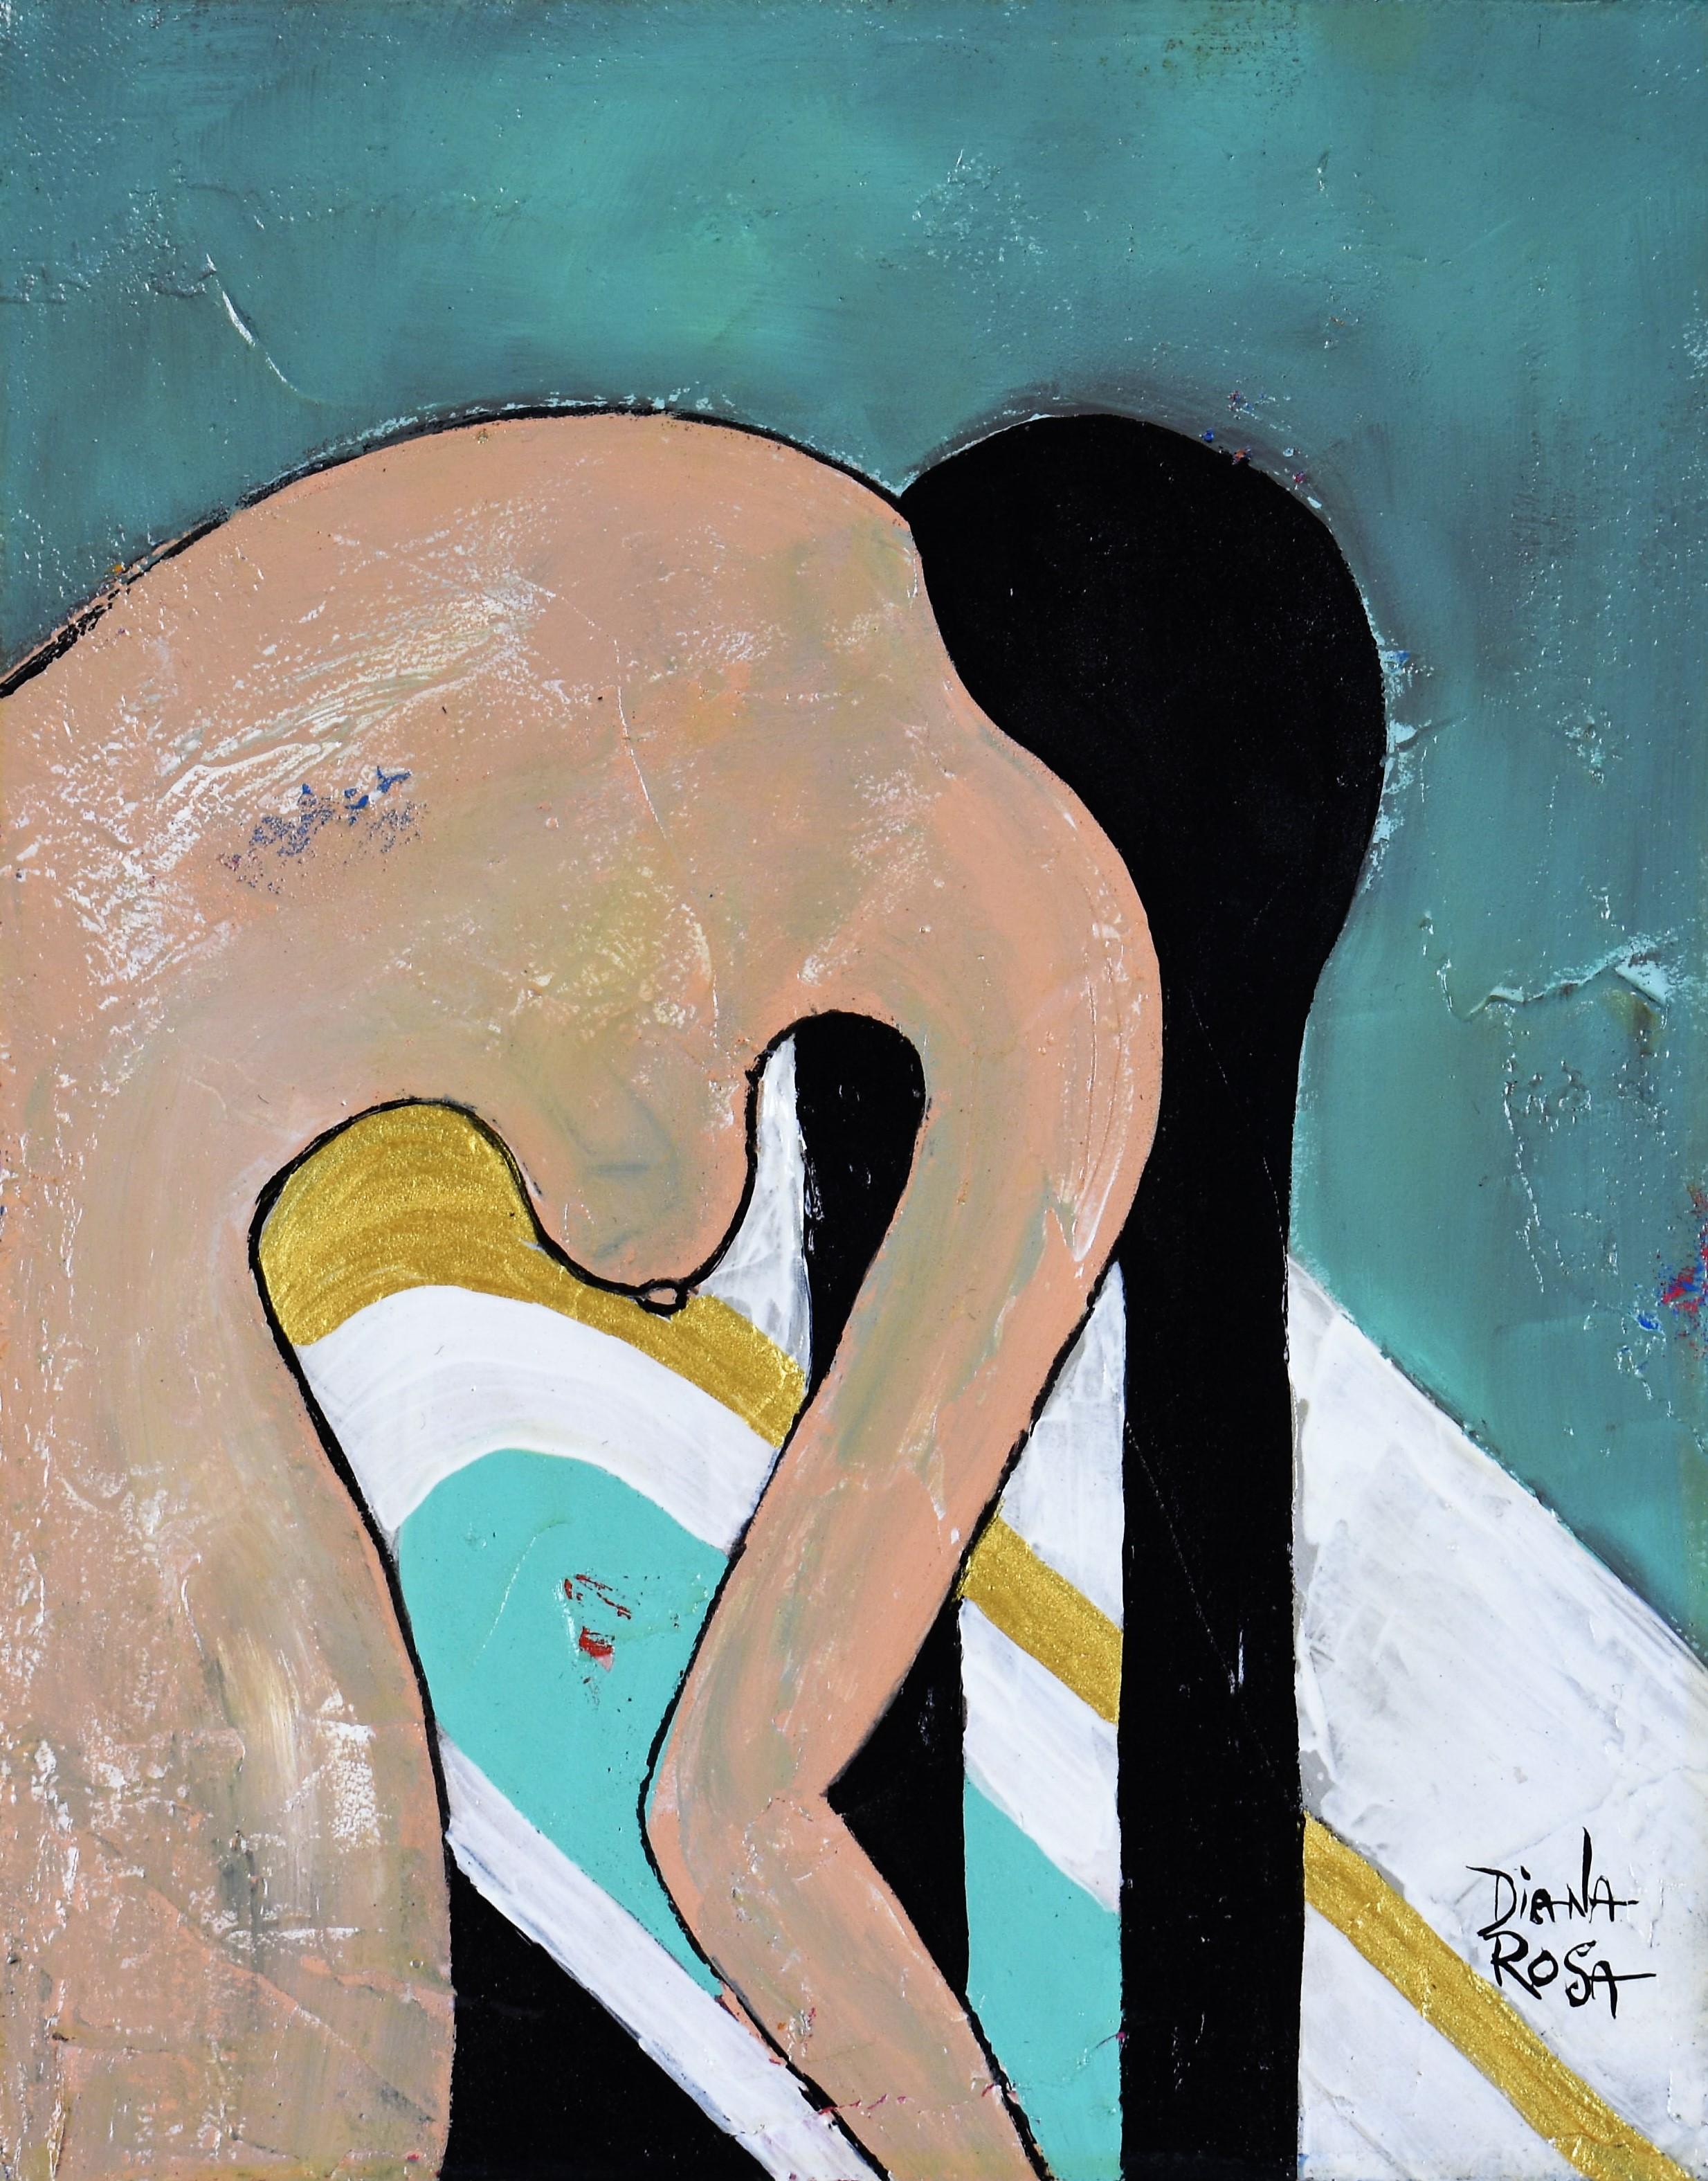 Diana Rosa Nude Painting – The Bath, Originalgemälde